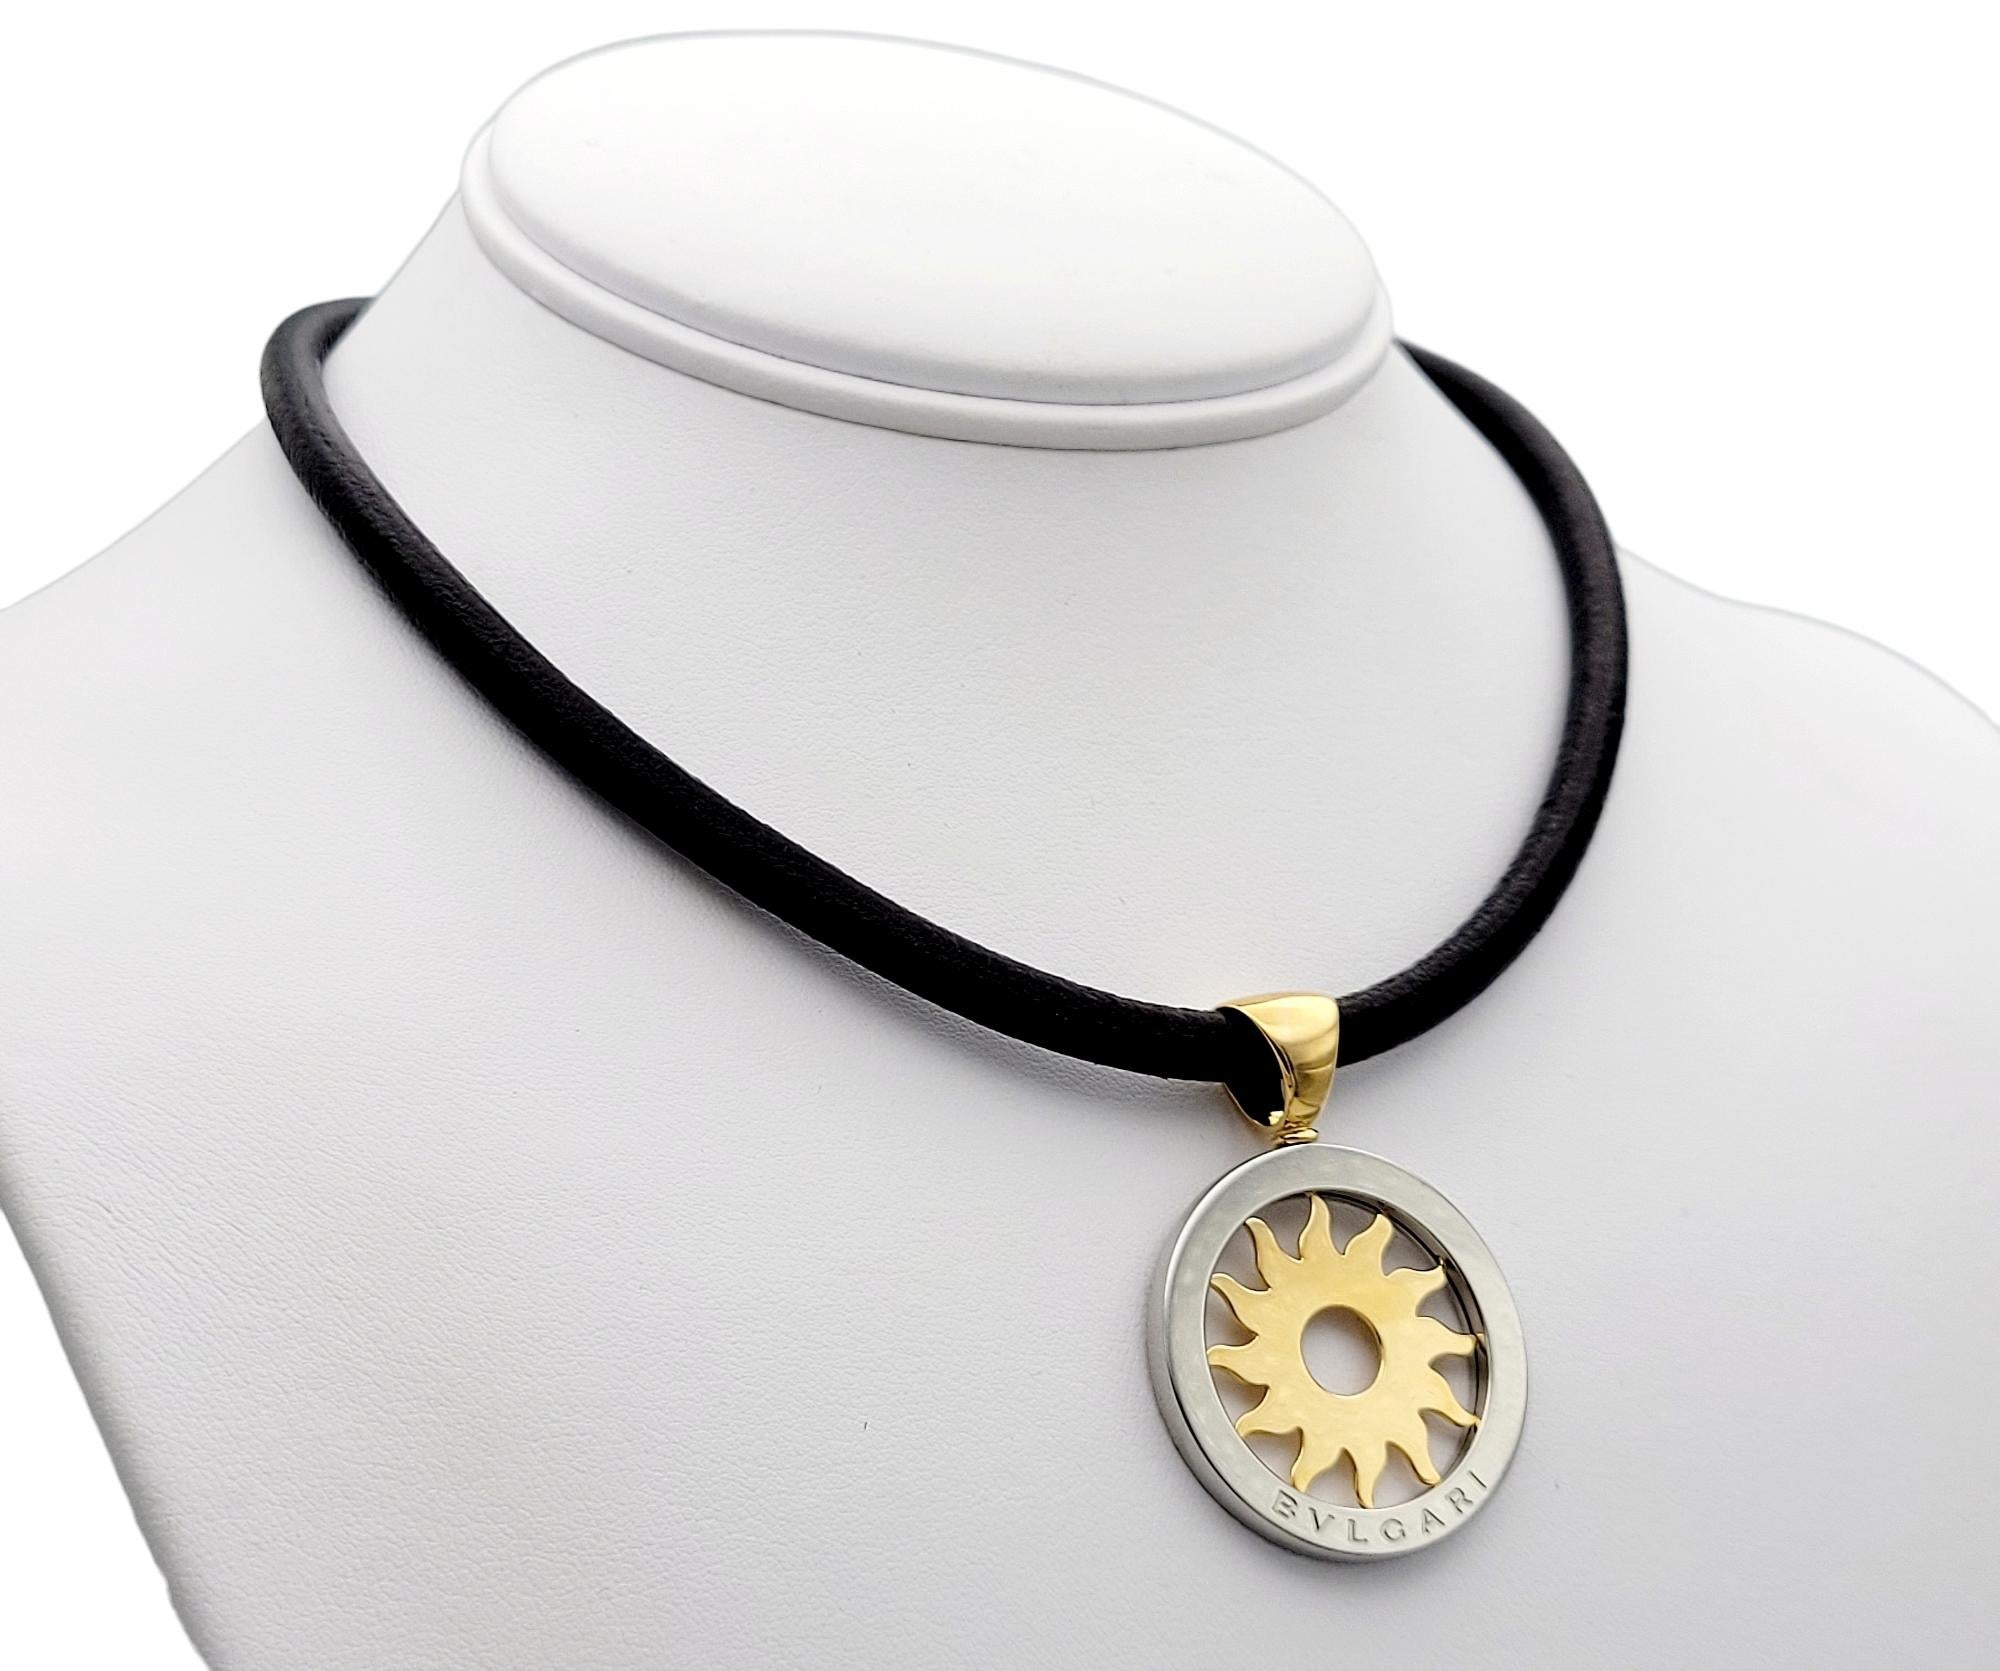 Bulgari Tondo Sun Pendant Leather Necklace in 18k Yellow Gold & Stainless Steel 9